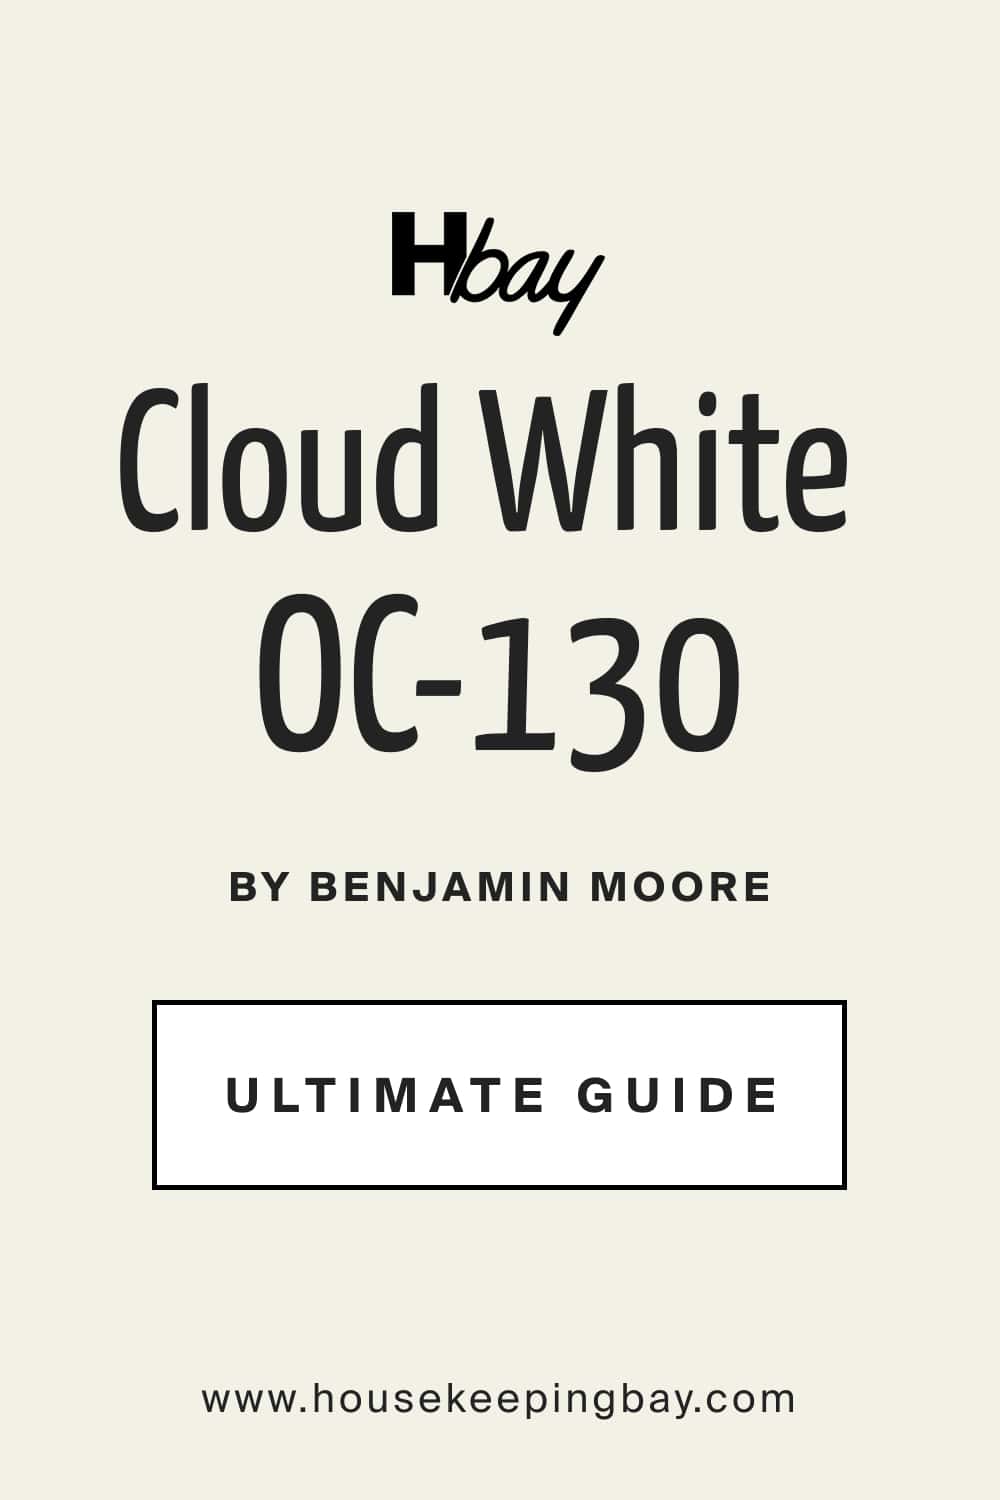 Cloud White OC 130 by Benjamin Moore Ultimate Guide